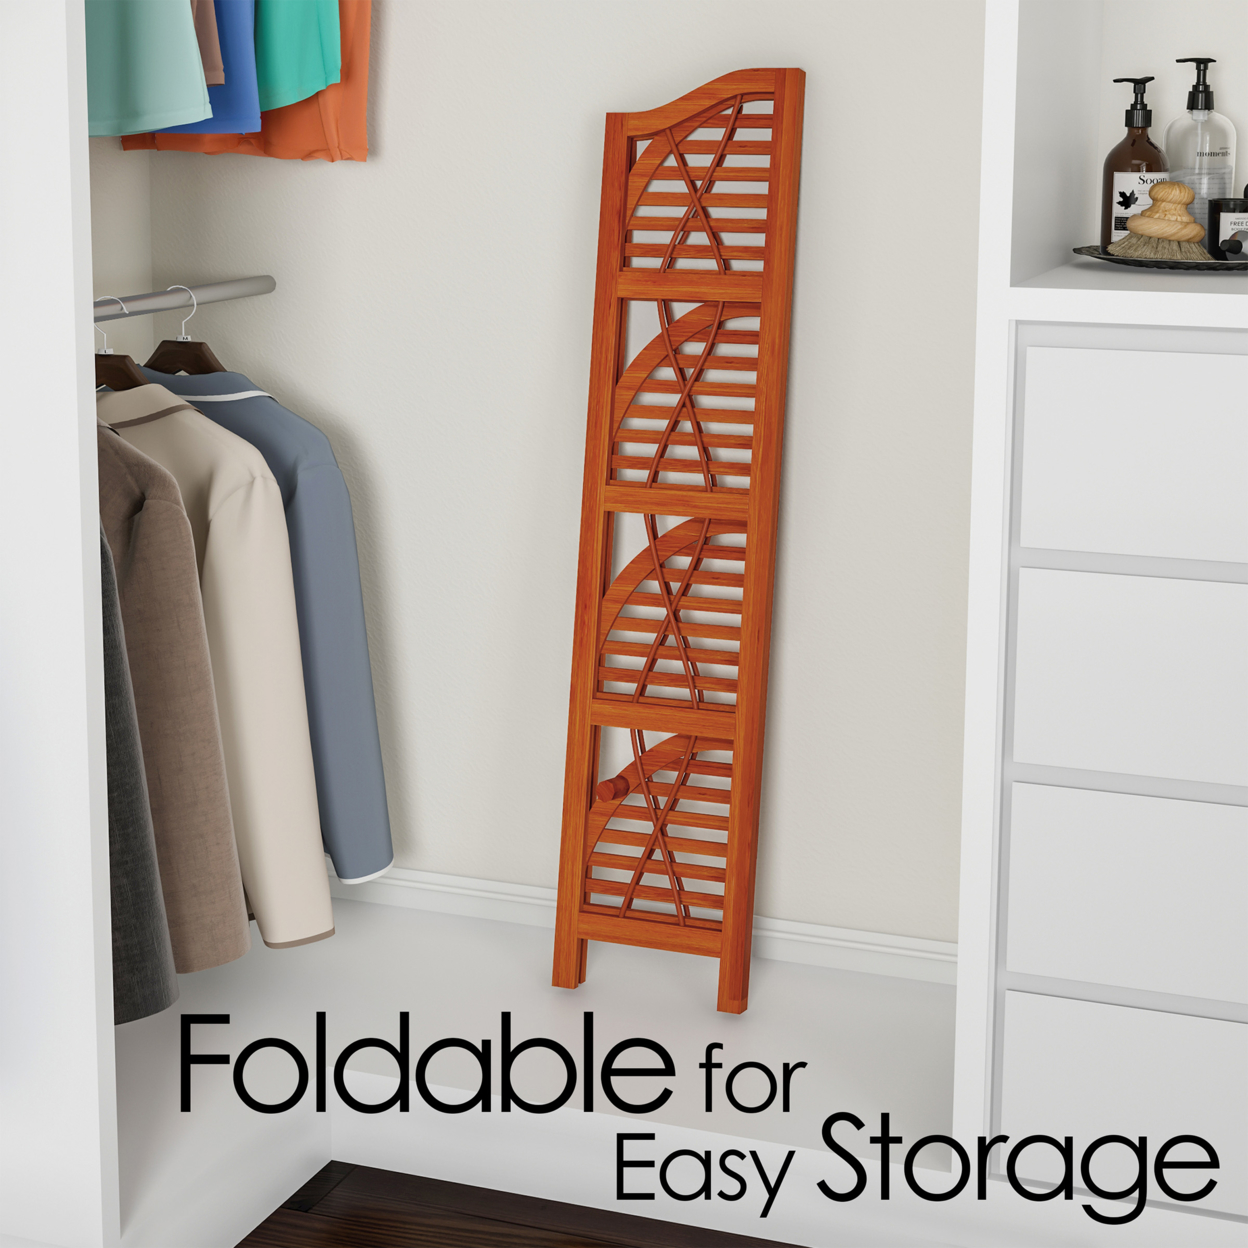 Folding Corner Shelf- 4 Tier Wooden Bookcase- For Display Shelving For Living Room, Bathroom, Kitchen Or Office